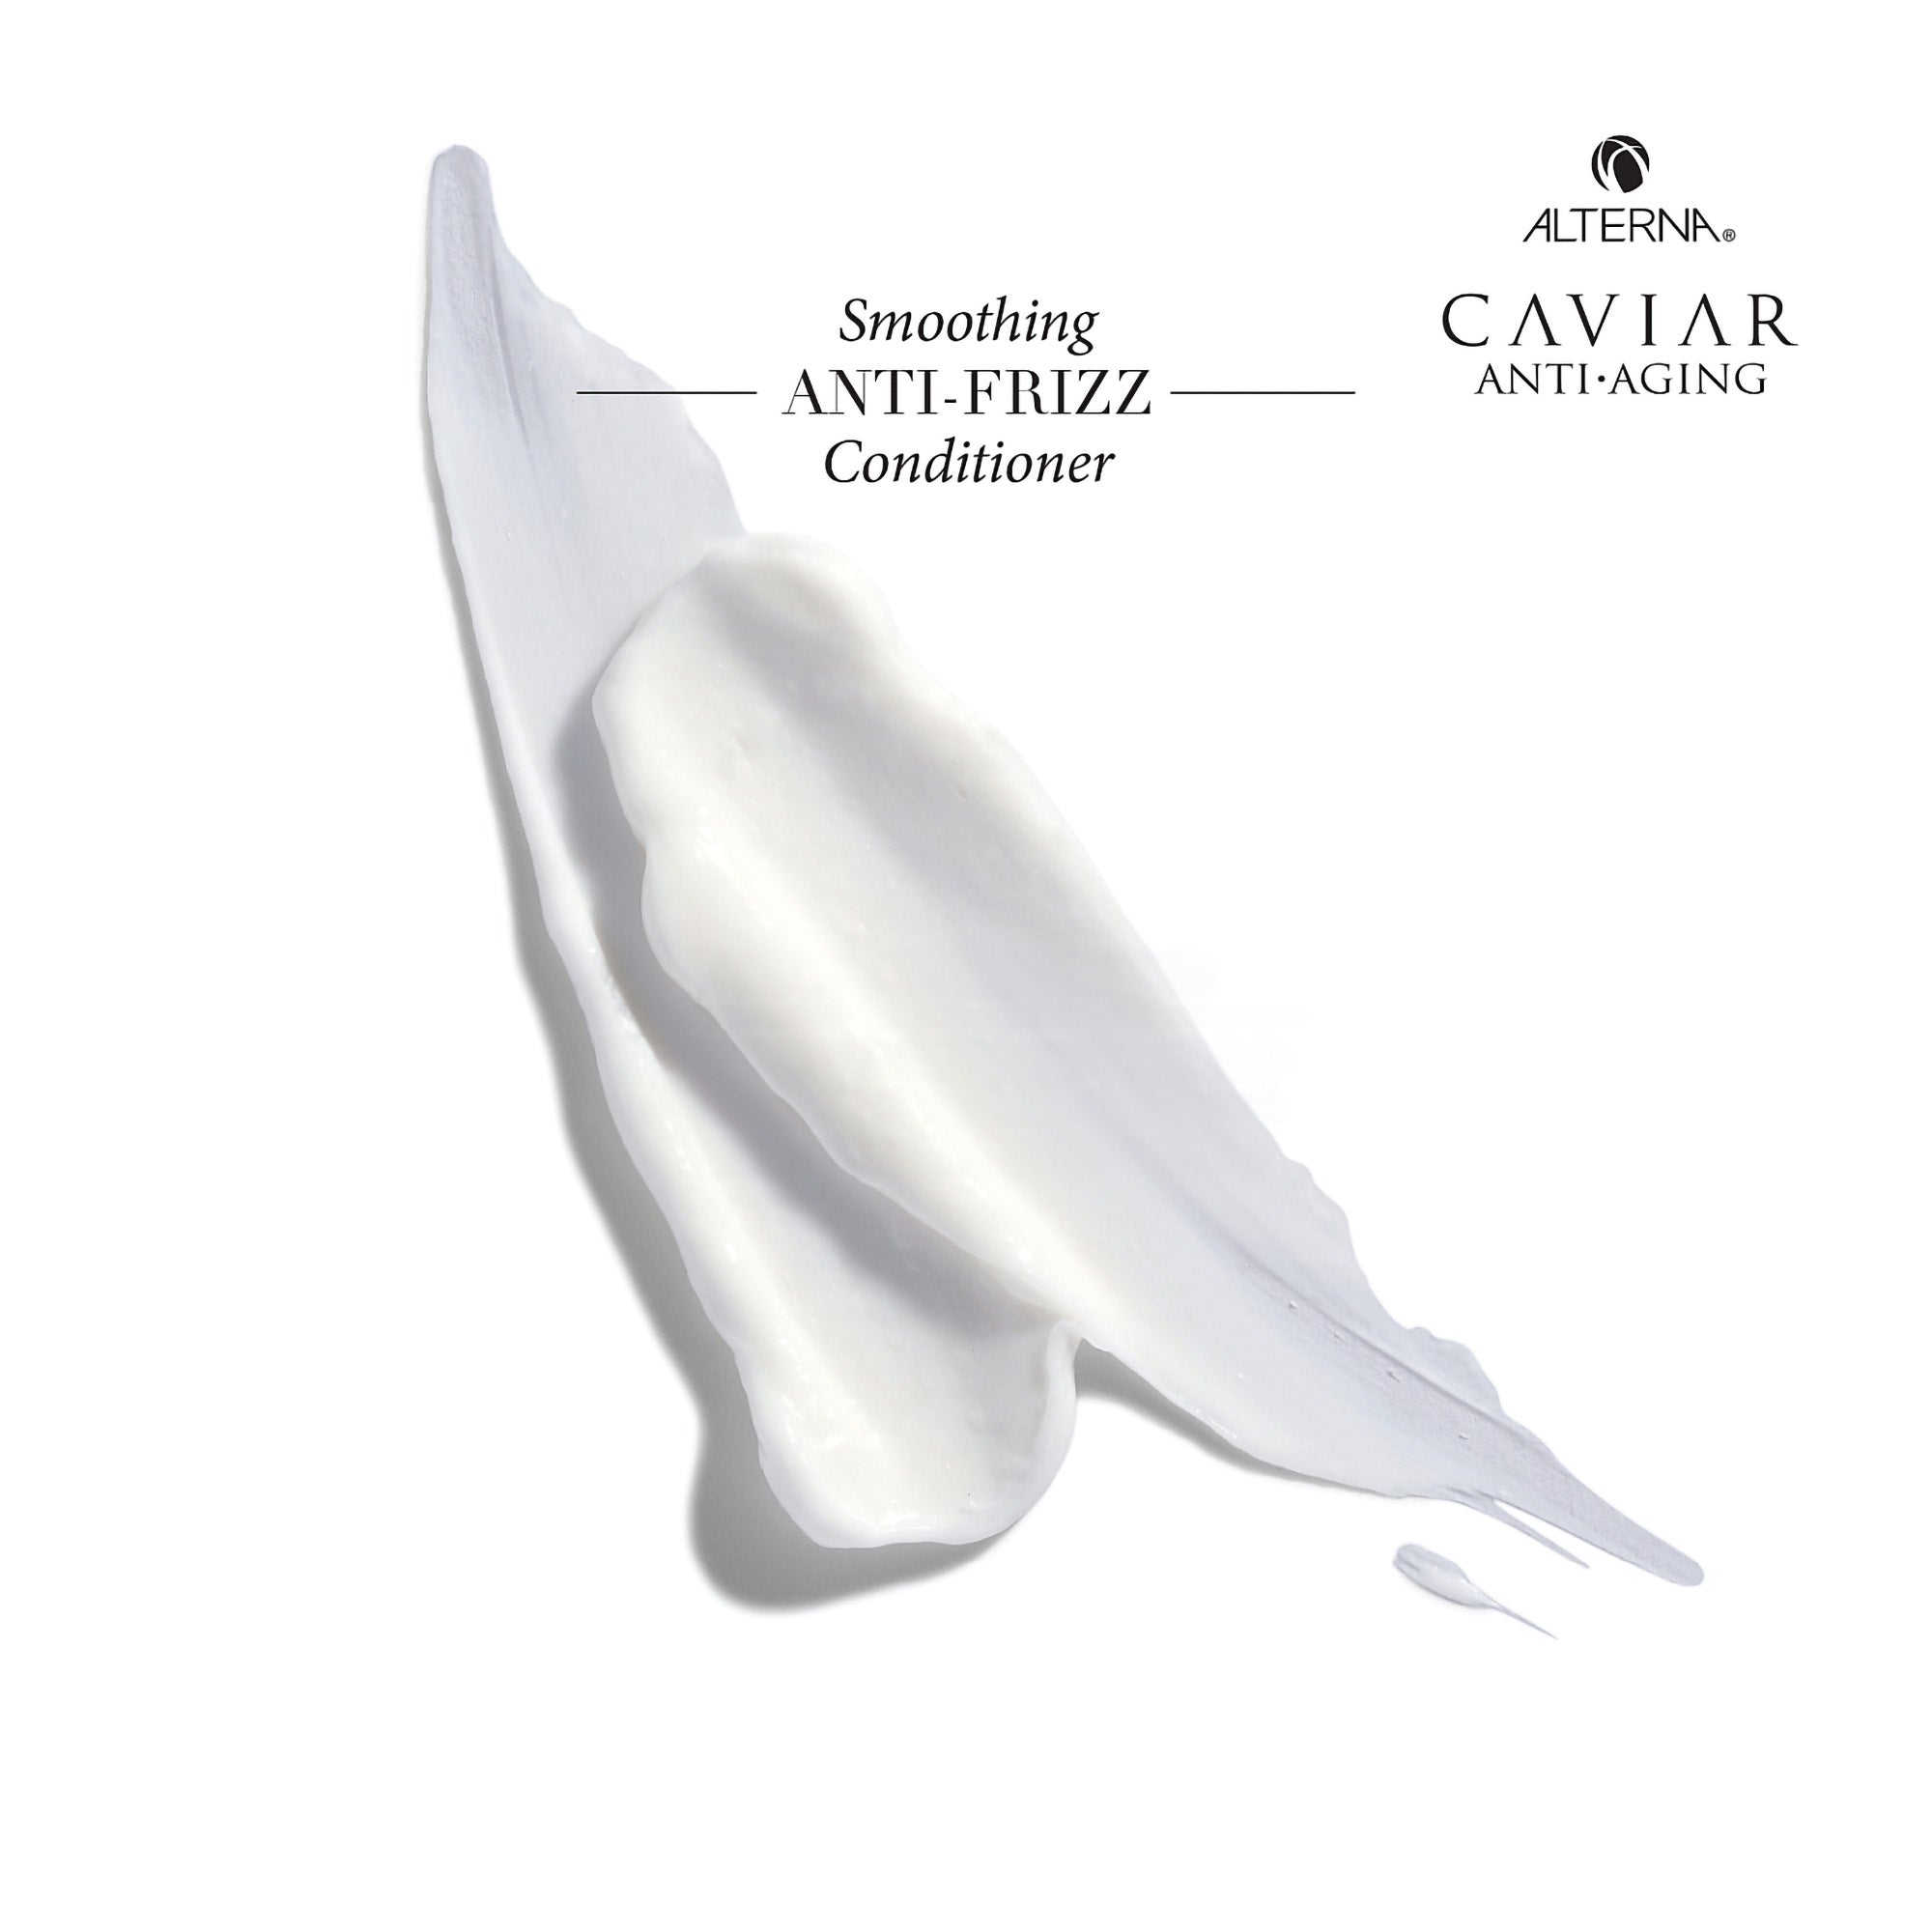 Alterna Caviar Anti-Aging Smoothing Anti-Frizz Conditioner / 16.5OZ